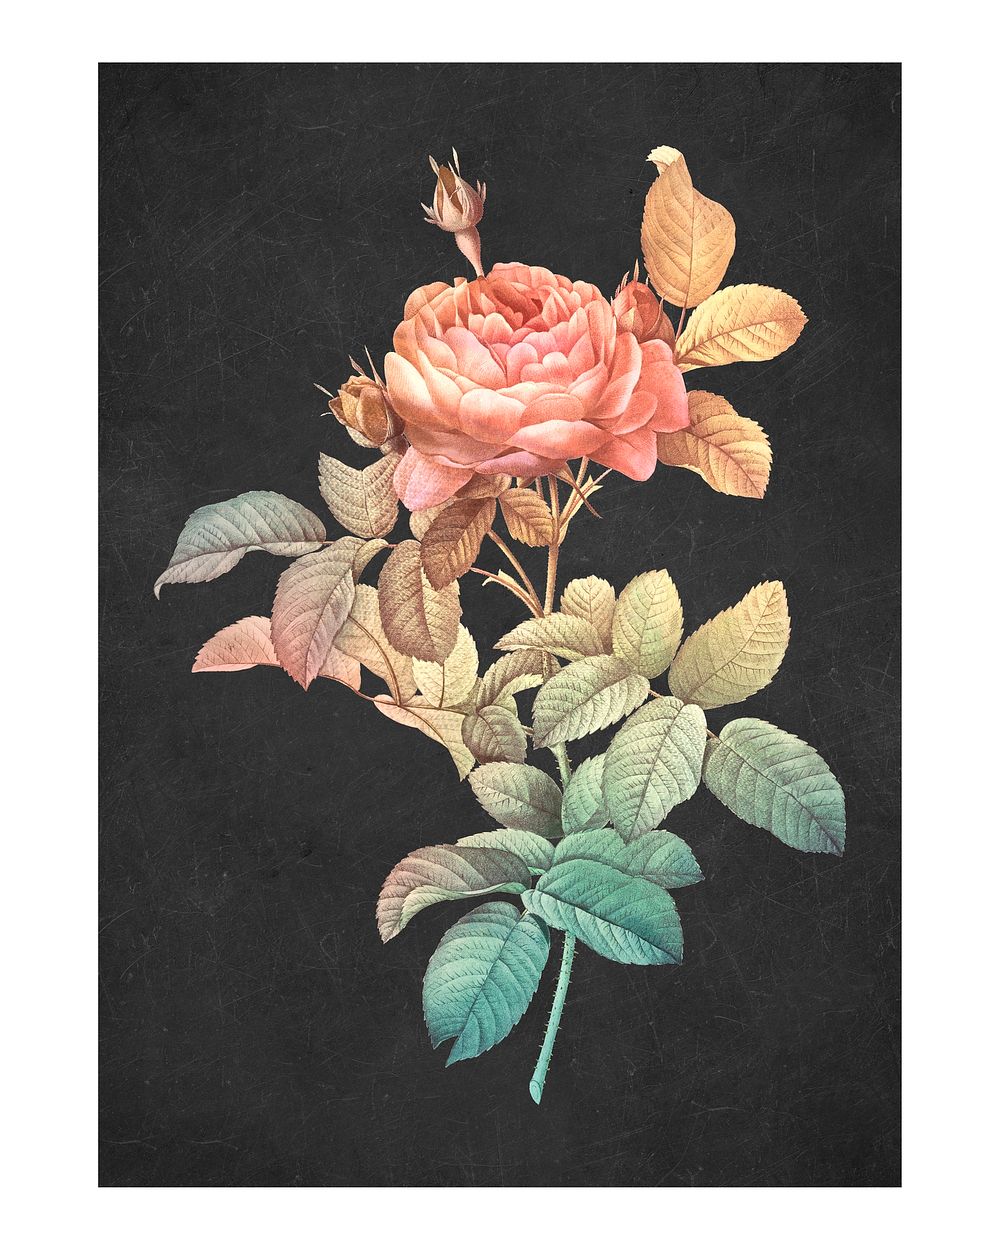 Rose vintage wall art print poster design remix from original artwork by Pierre-Joseph Redout&eacute;.